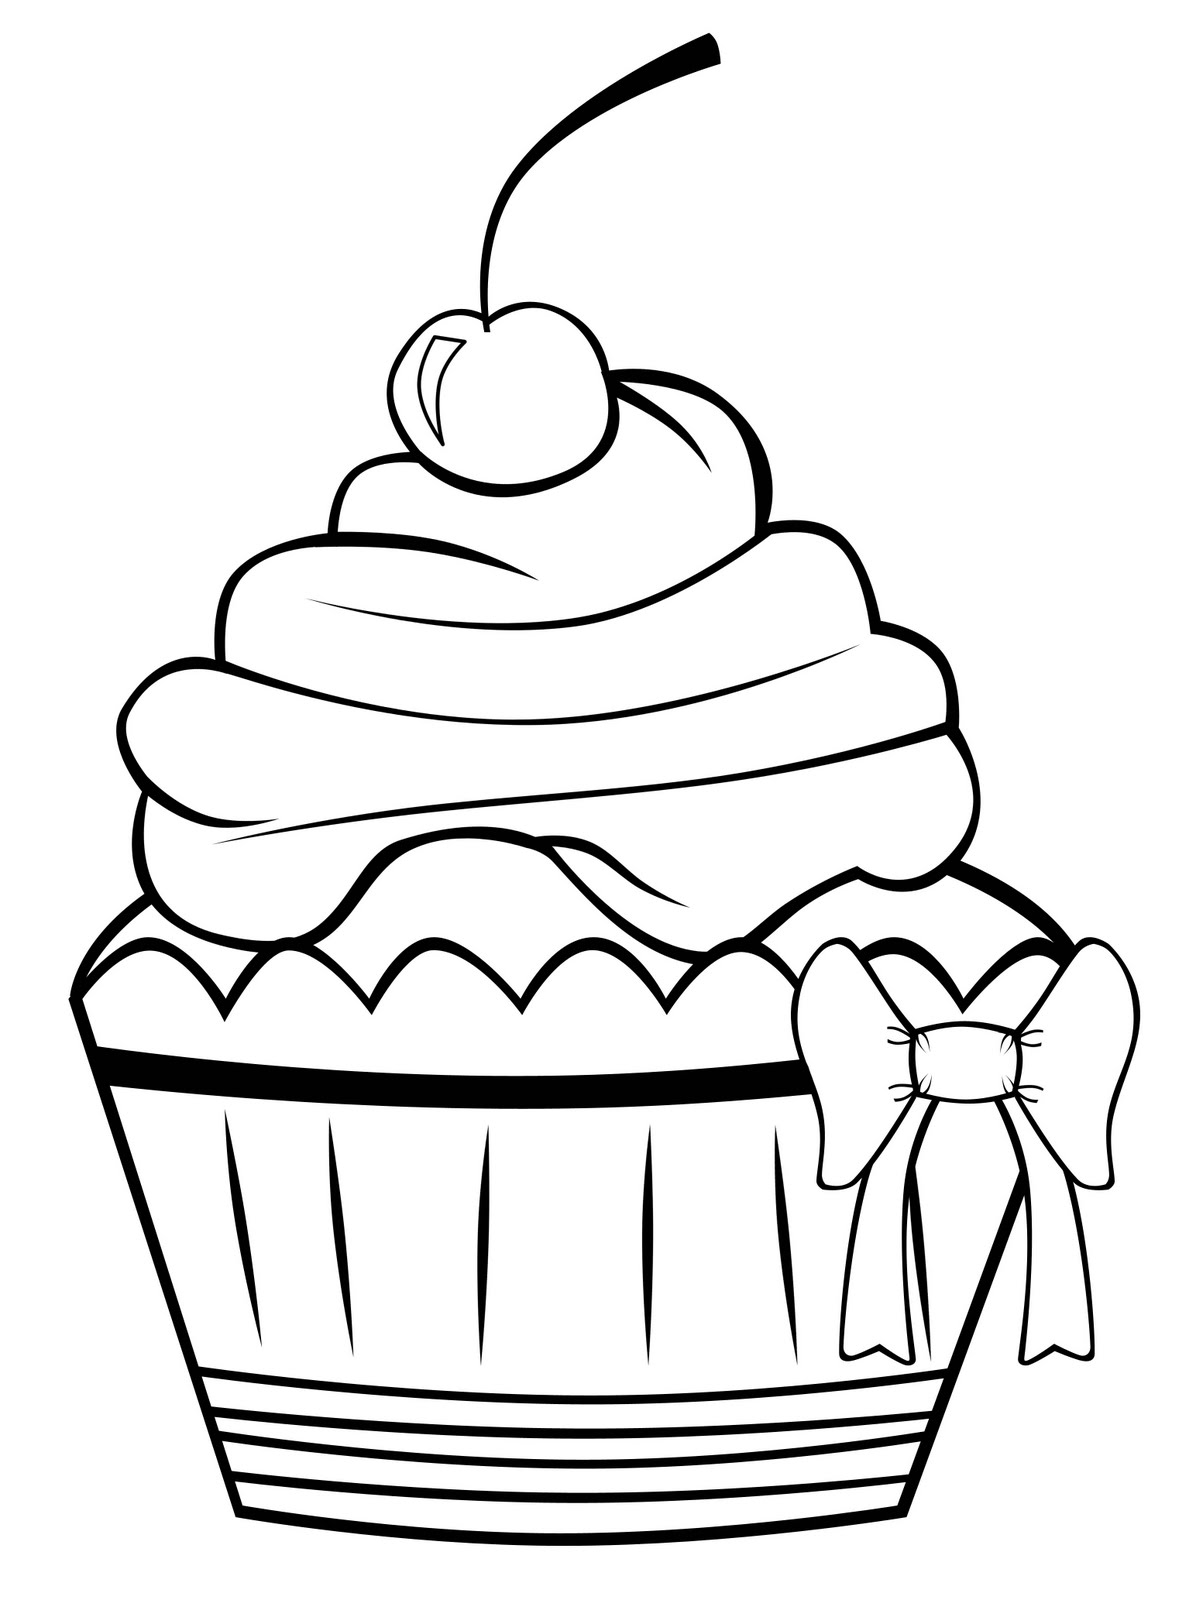 Cupcake Line Drawing - Gallery